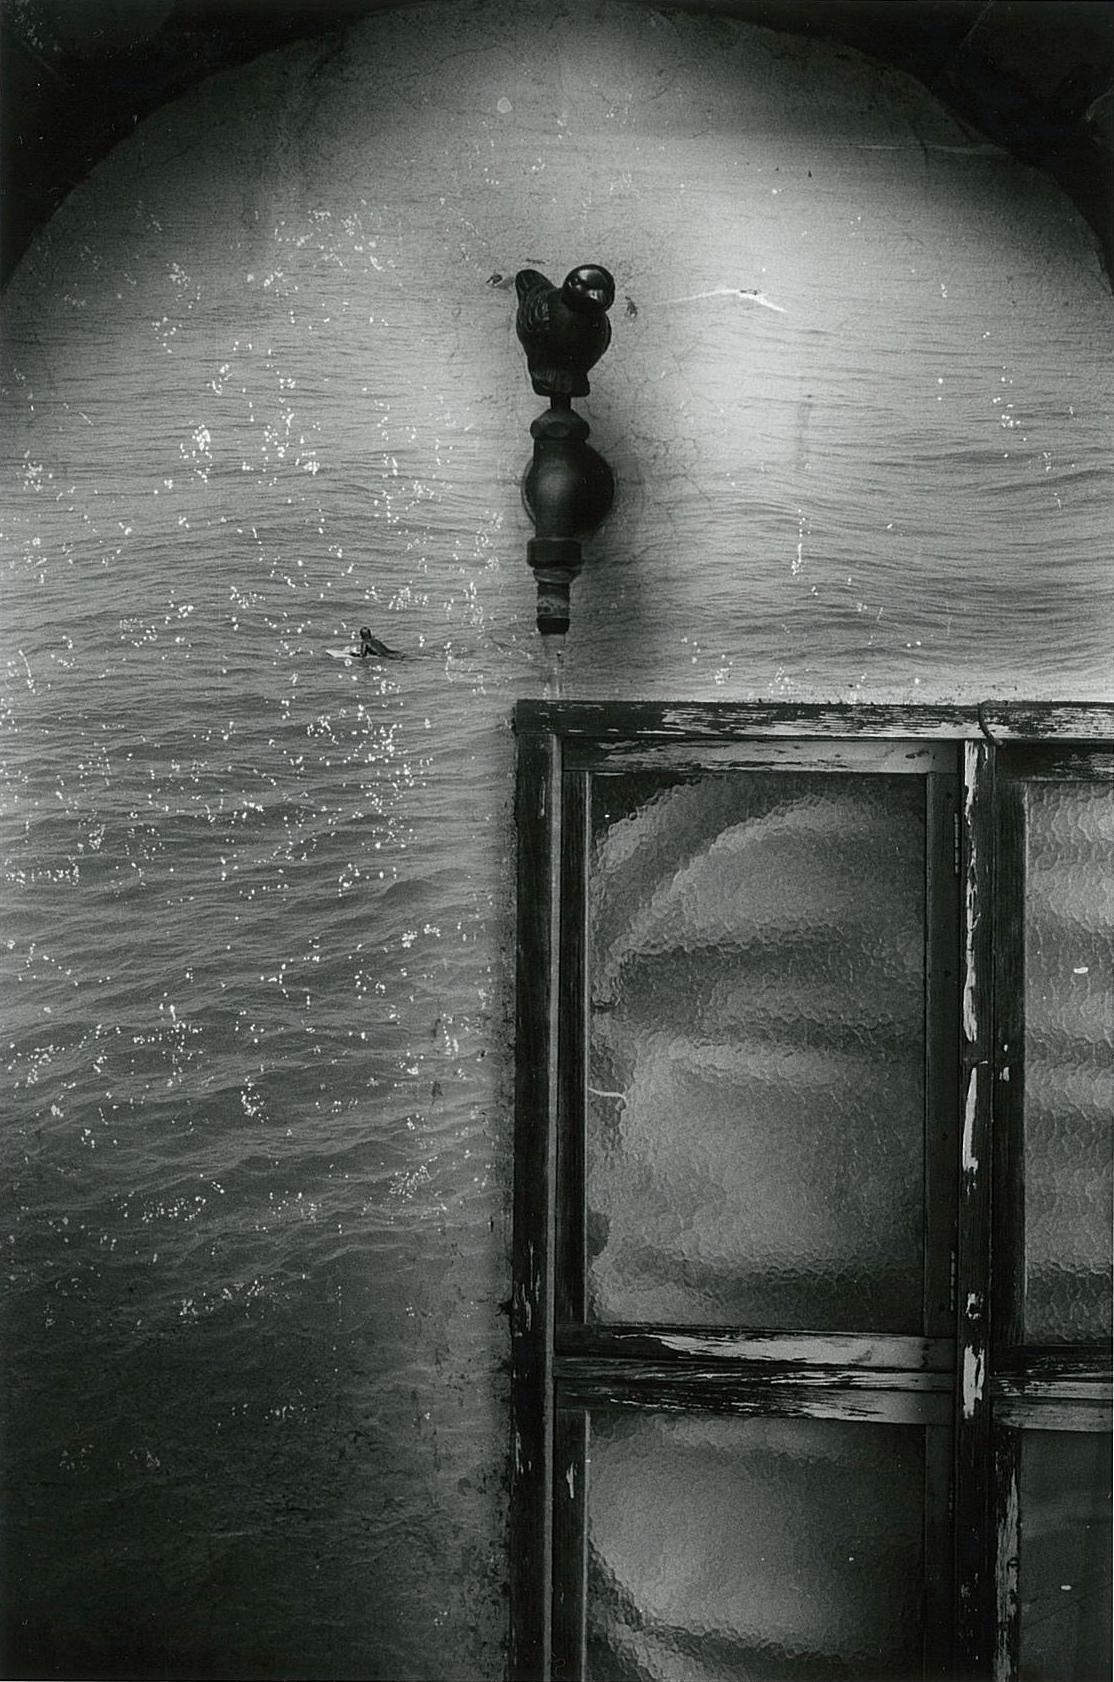 Black and White Photograph Kosuke Kawamura - WARNING #49 - Whiting, Photographie, Art, Abstrait, Noir et Blanc, Eau, The Window